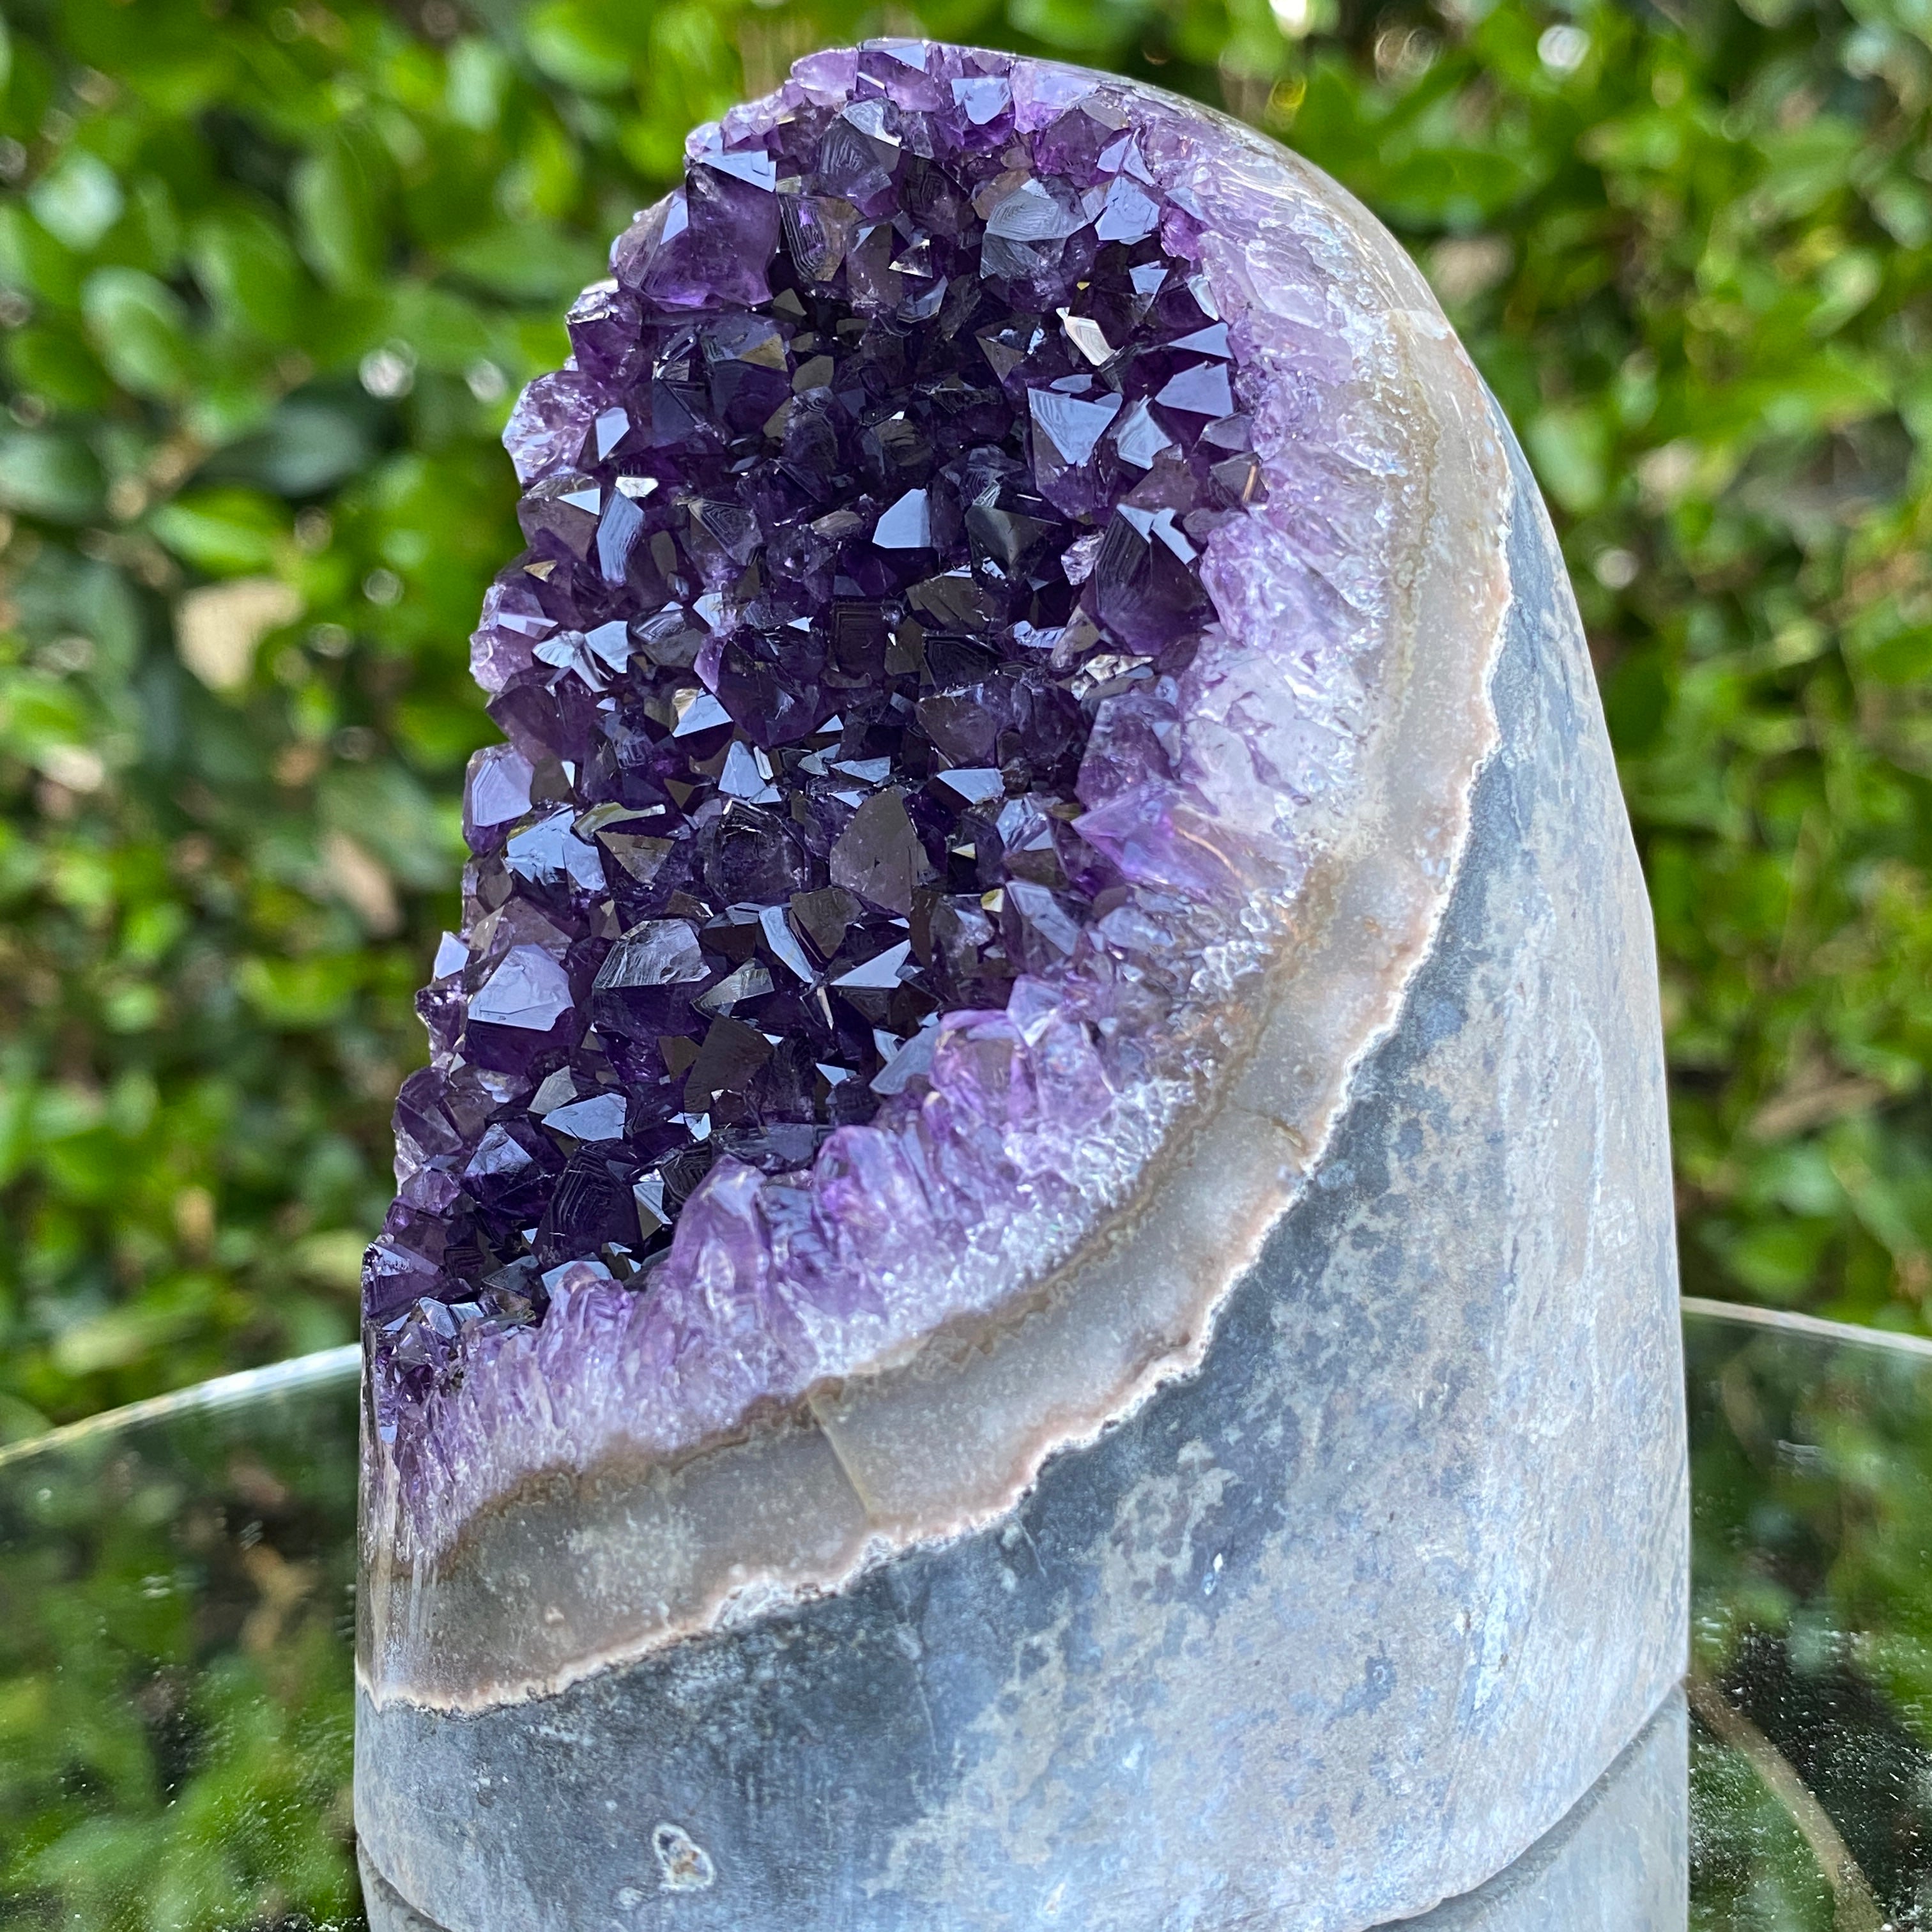 806g 11x9x8cm Grade A+ Big Smooth Crystal Purple Amethyst Geode from Uruguay